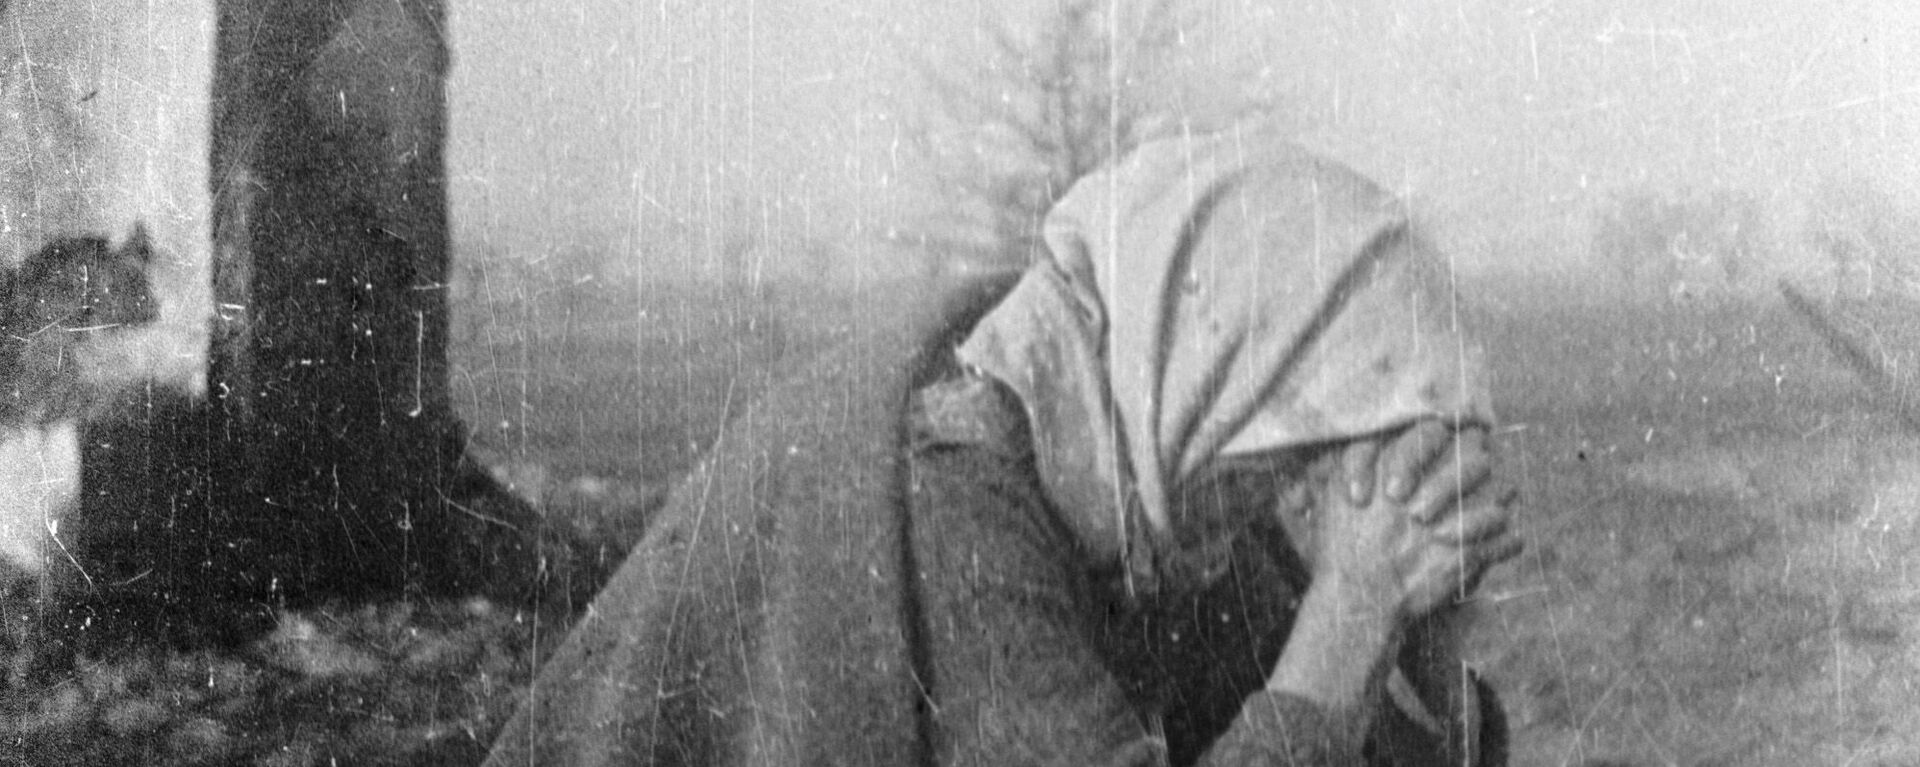 A woman crying - Sputnik International, 1920, 09.04.2021